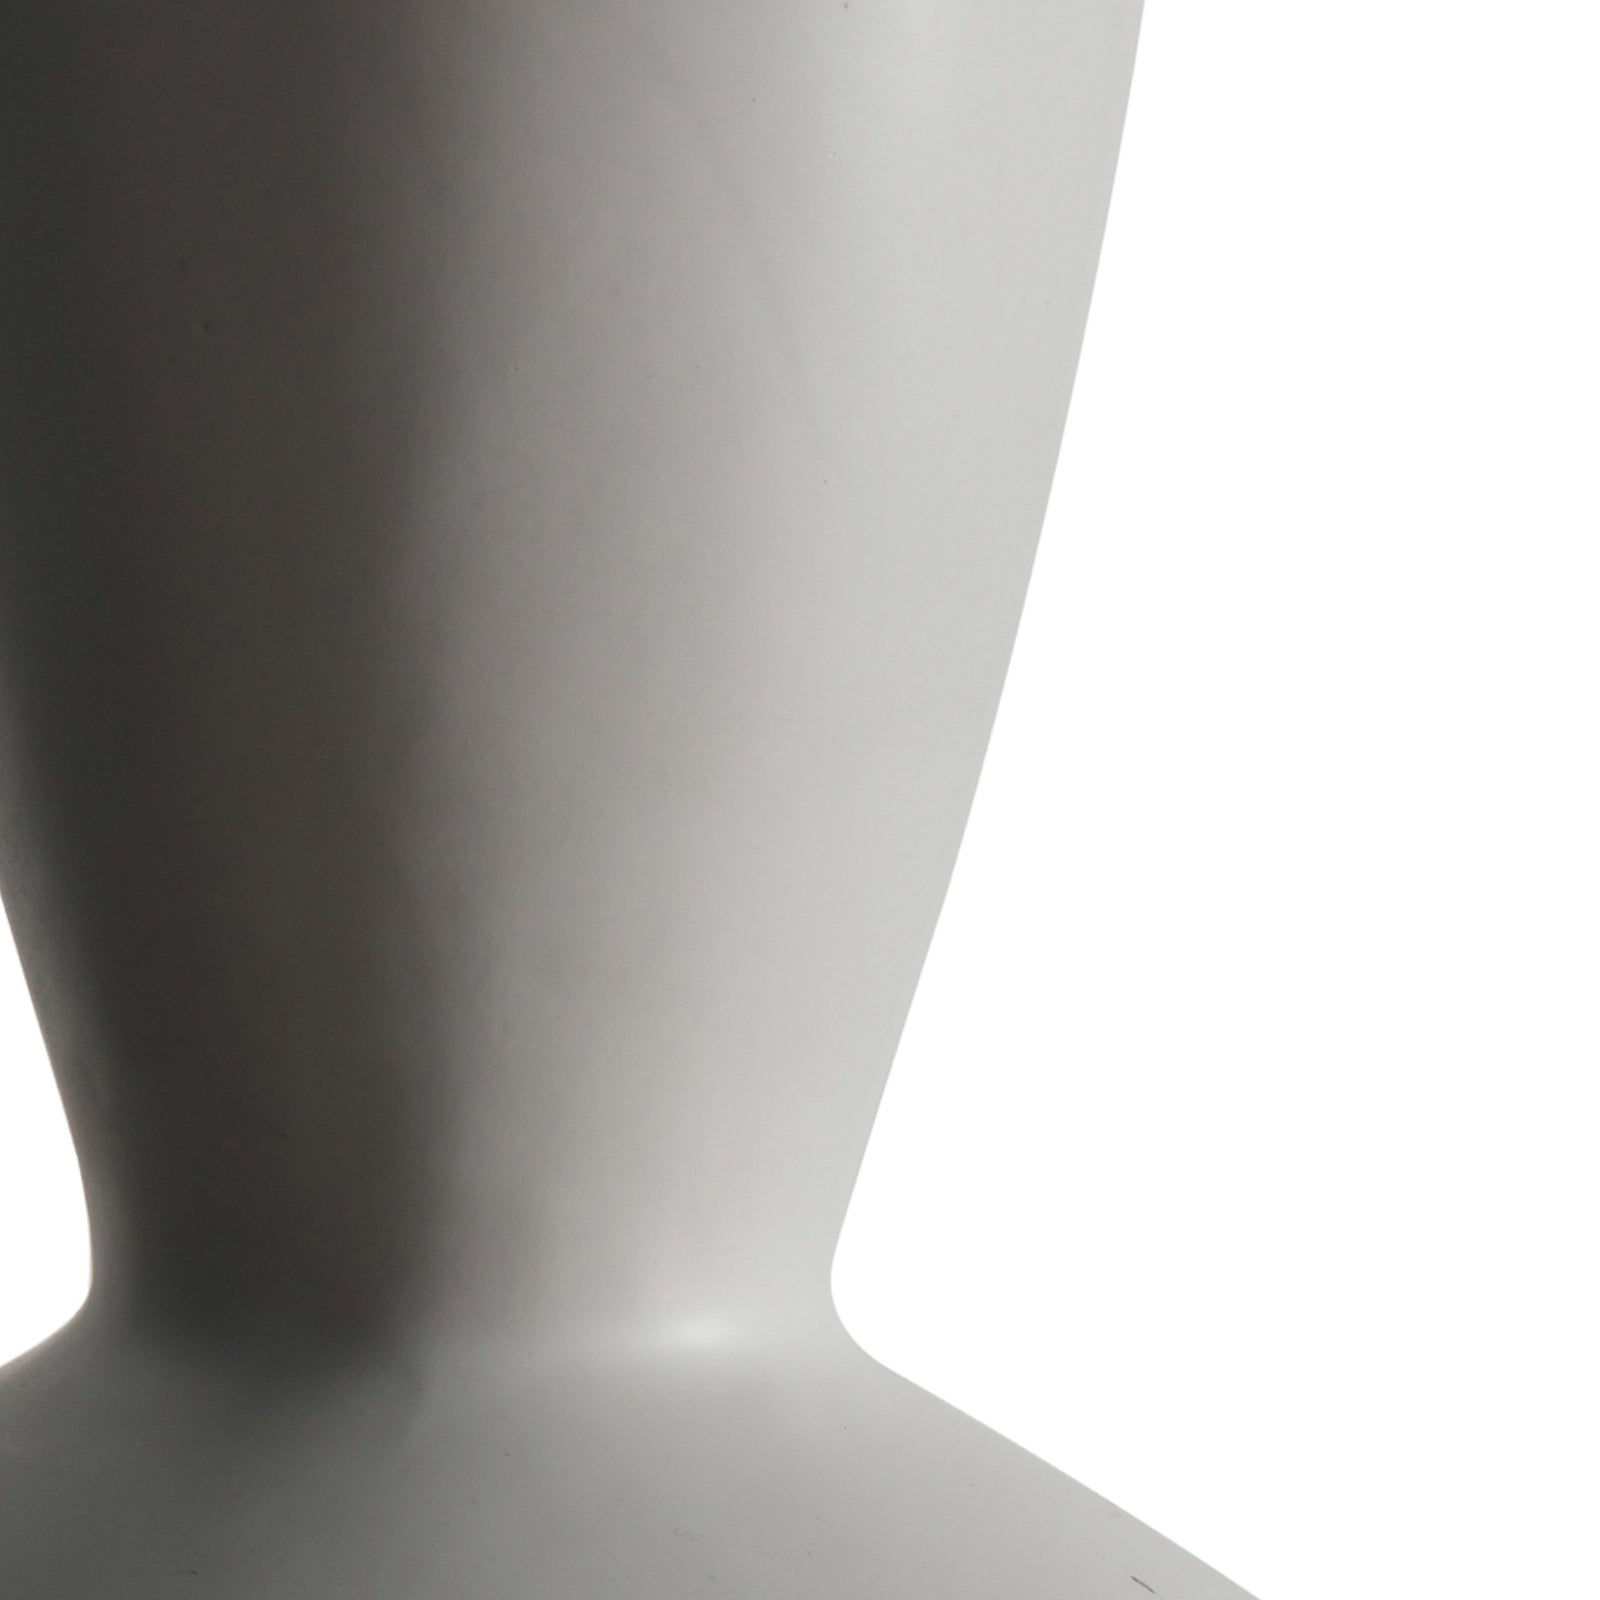 White Modern Urn Shaped Vase - The Farthing